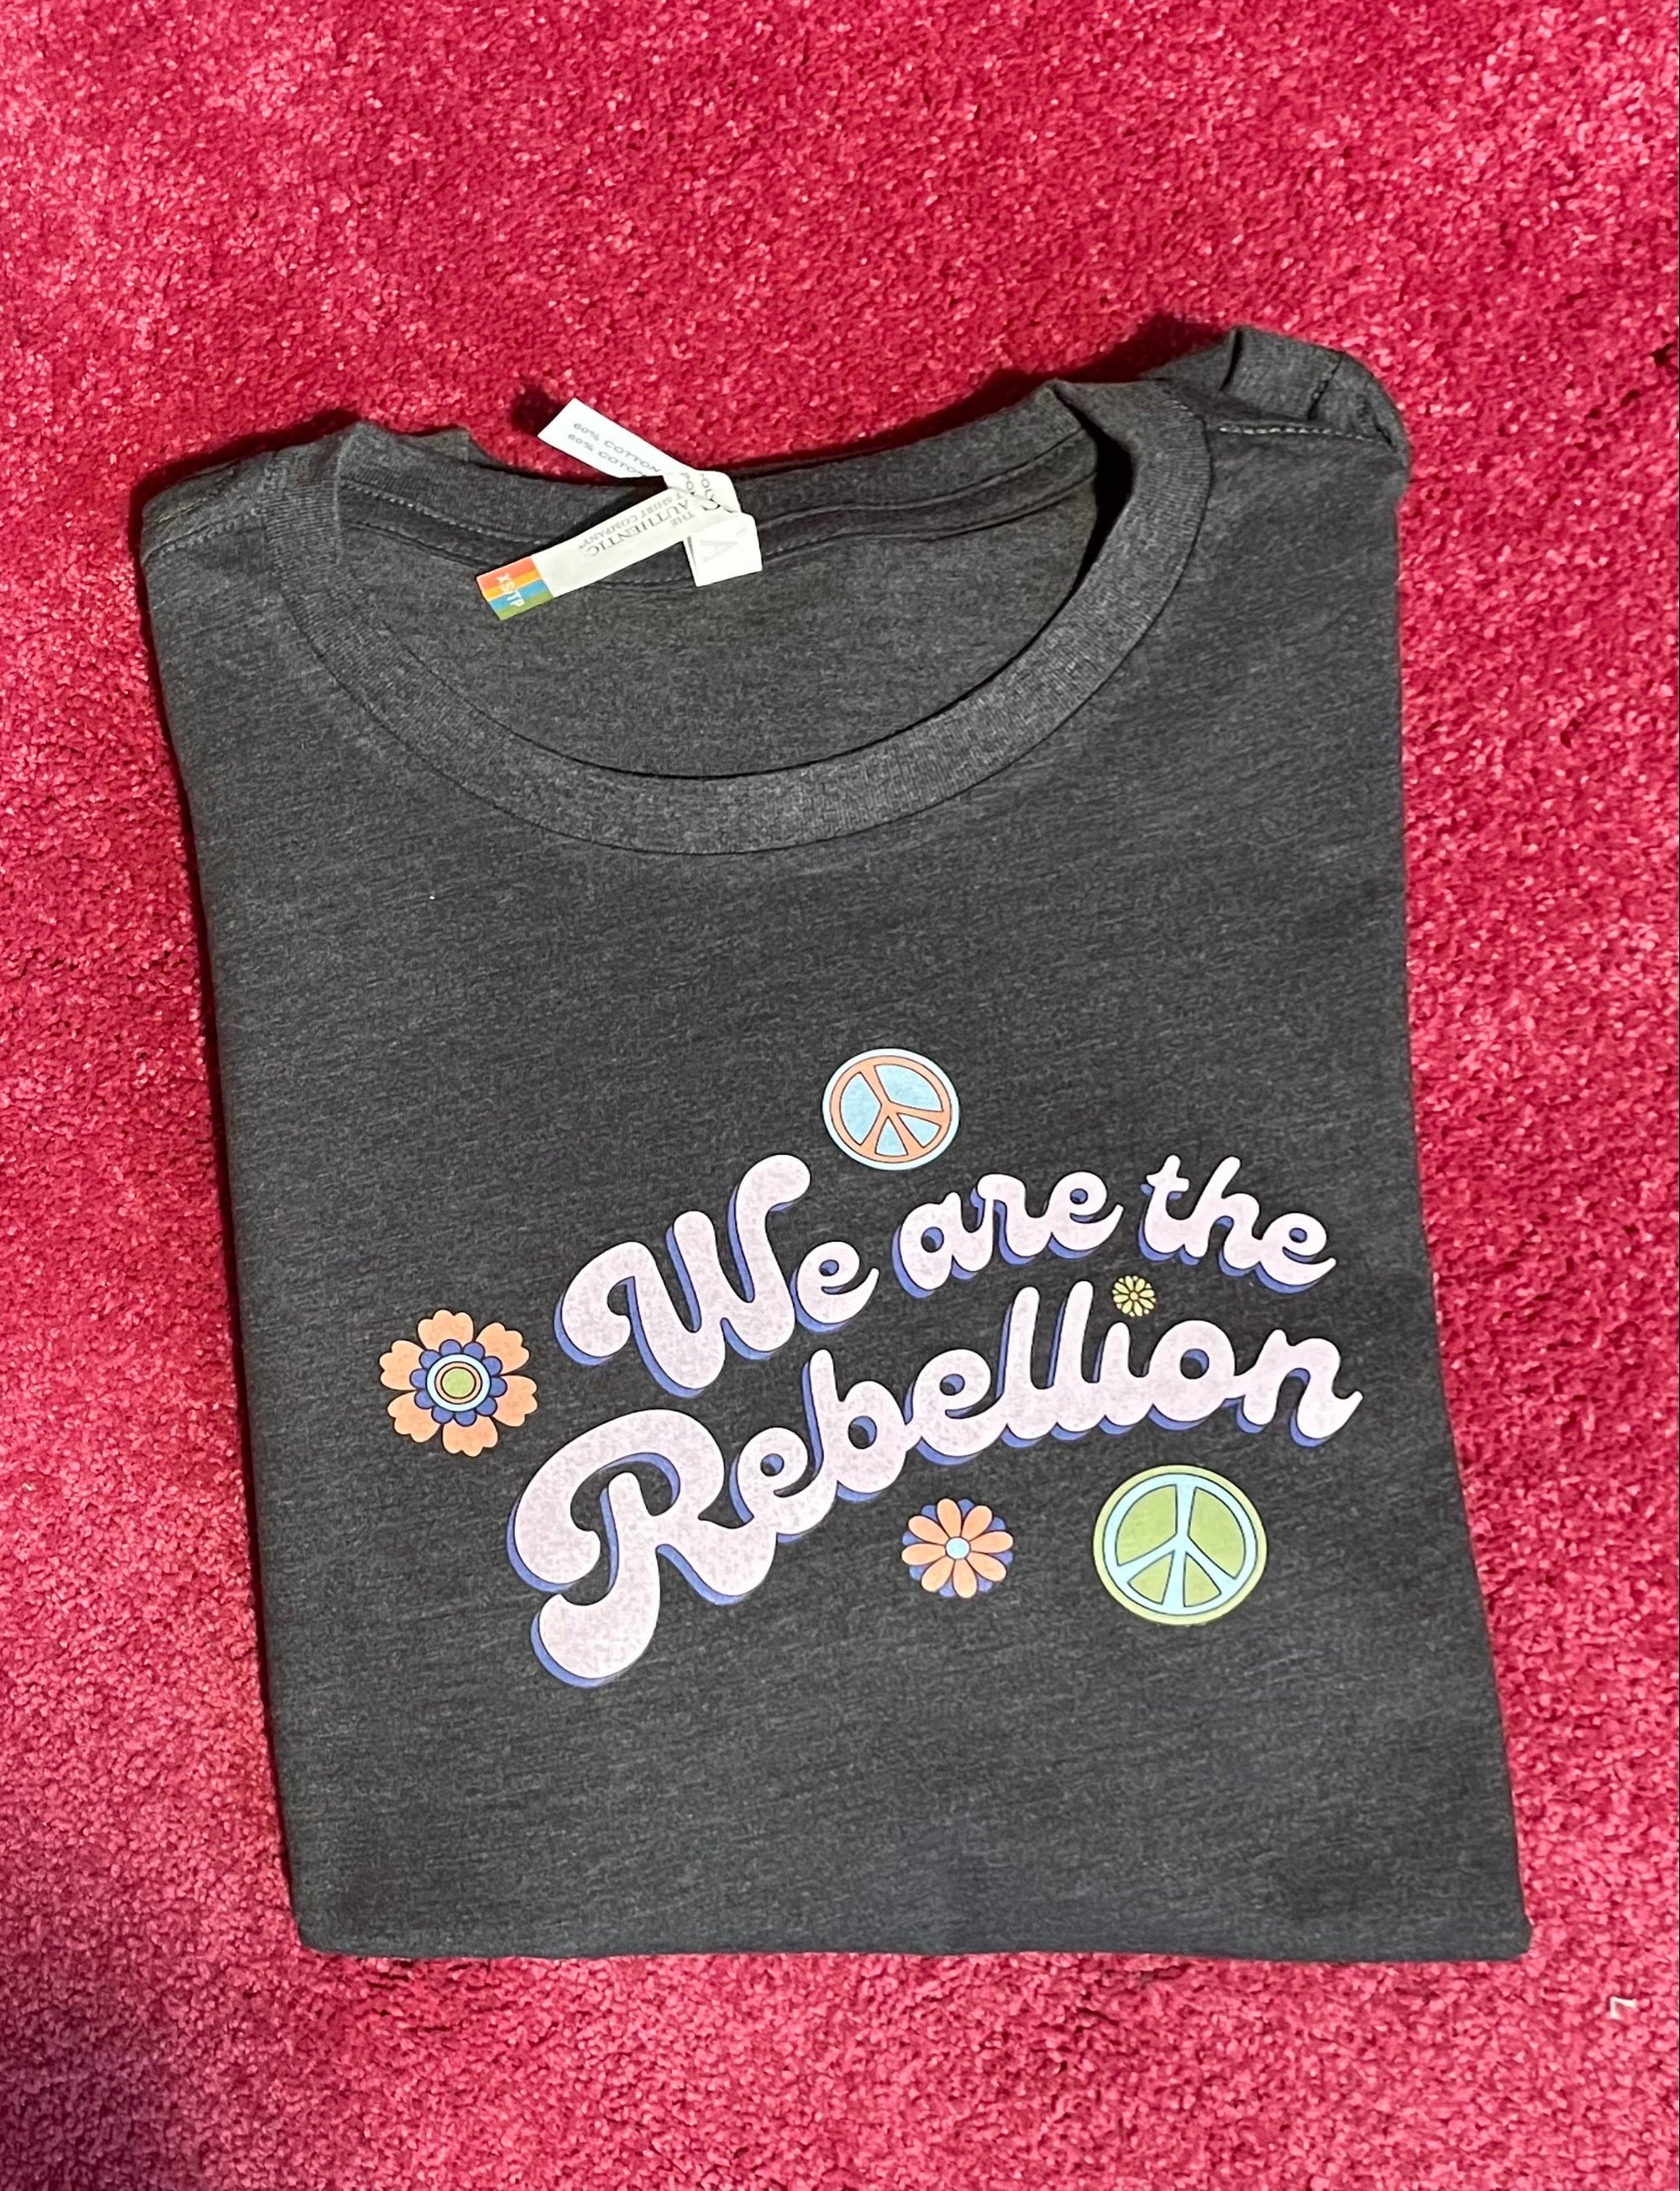 We Are The Rebellion Tees - Birch Hill Studio